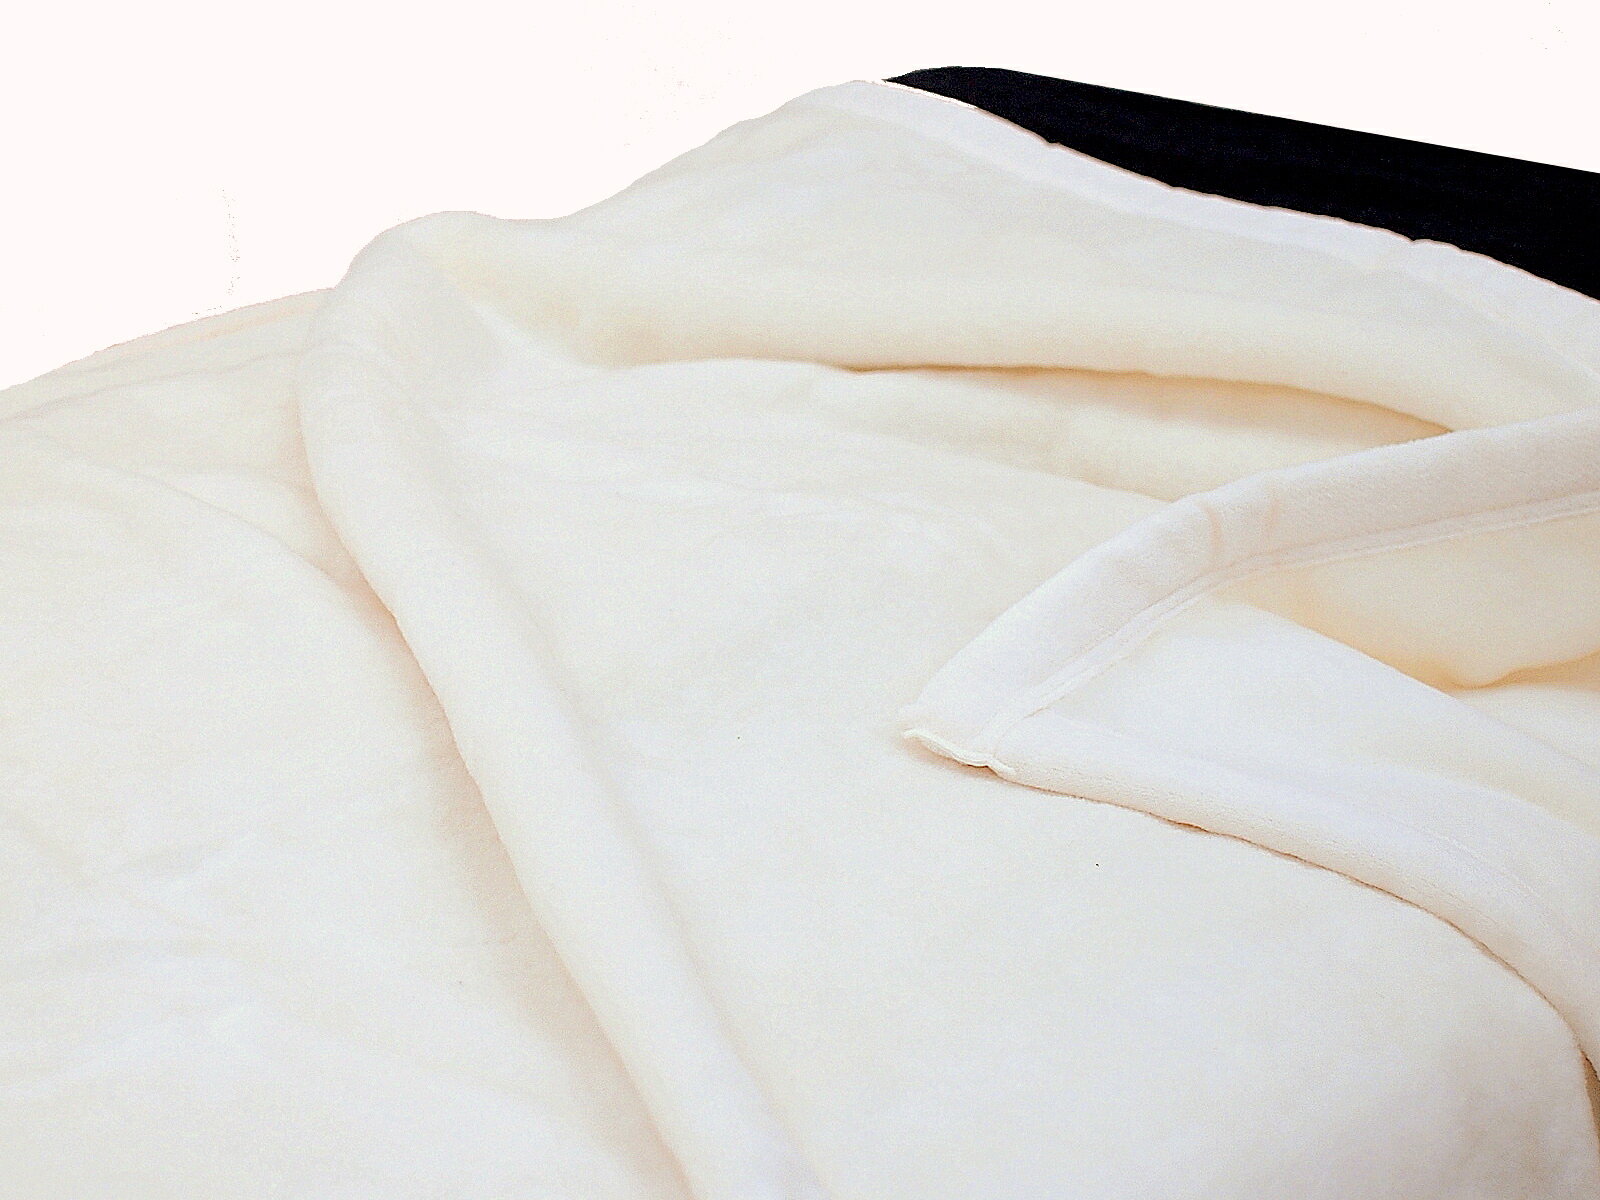 Eウールのふわふわ毛布(シングル)／日本製 高品質 羊毛 パイル ふんわり肌触り 毛布 シングルサイズ 洗える 清潔 当社独自技術のEウール加工